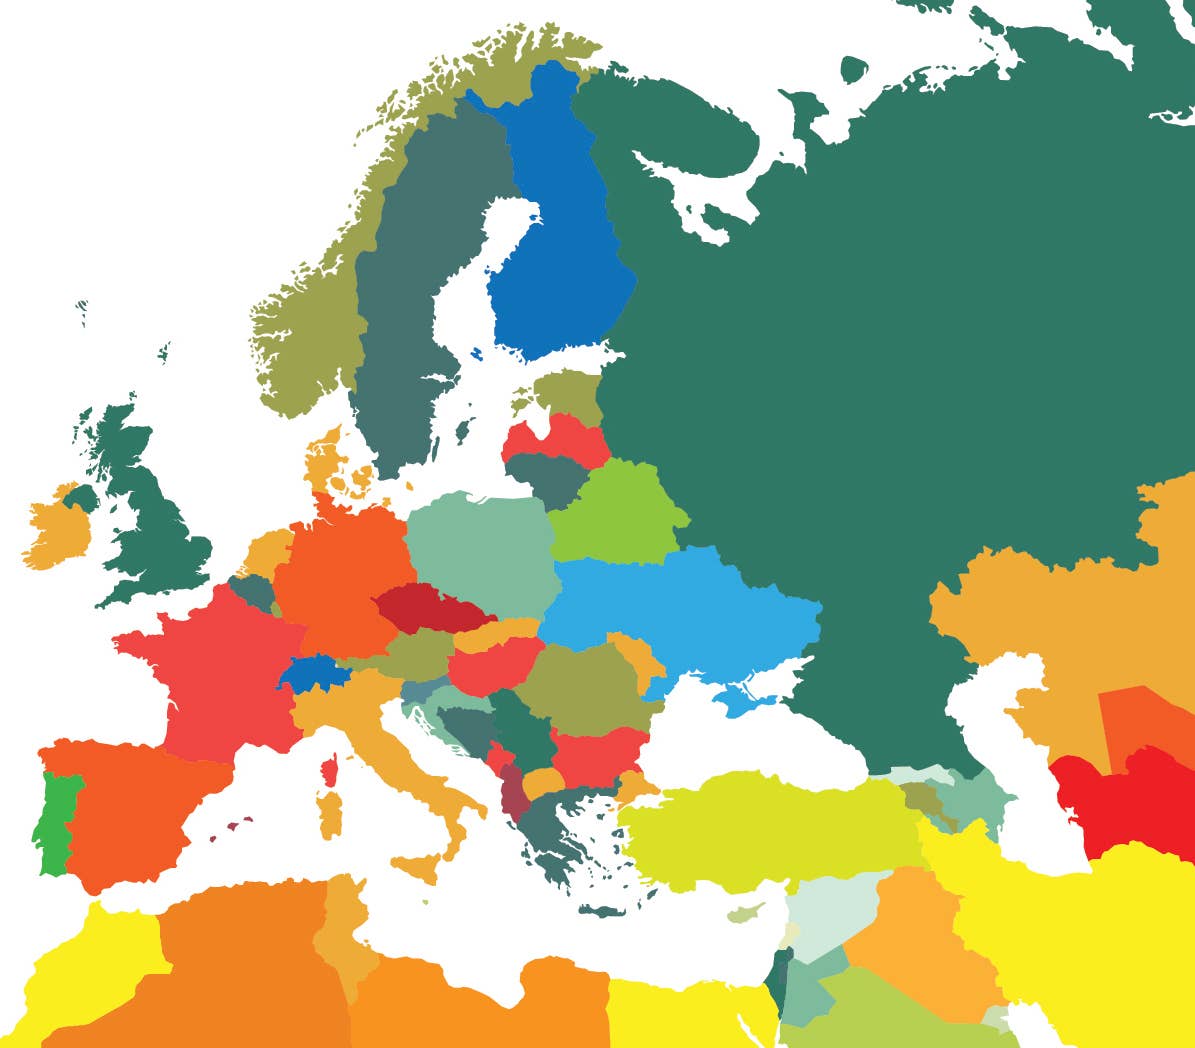 Europe Map Quiz. 50 Стран. People in European Countries. Шаблон география население Европа. Пятидесяти стран